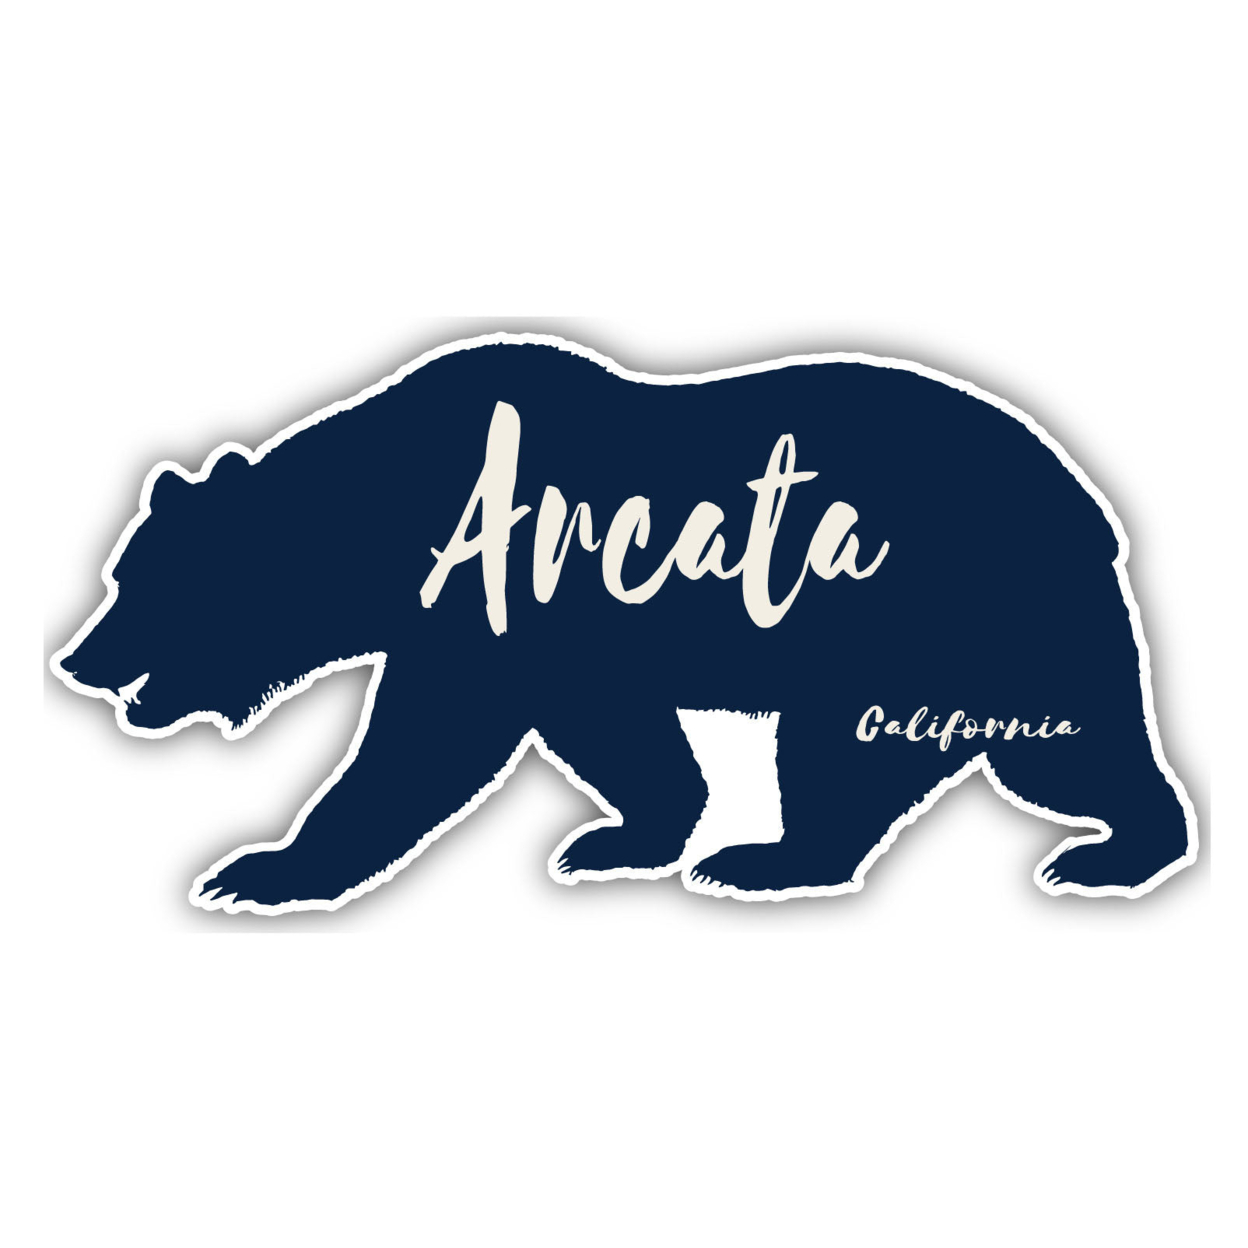 Arcata California Souvenir Decorative Stickers (Choose Theme And Size) - 4-Pack, 2-Inch, Bear